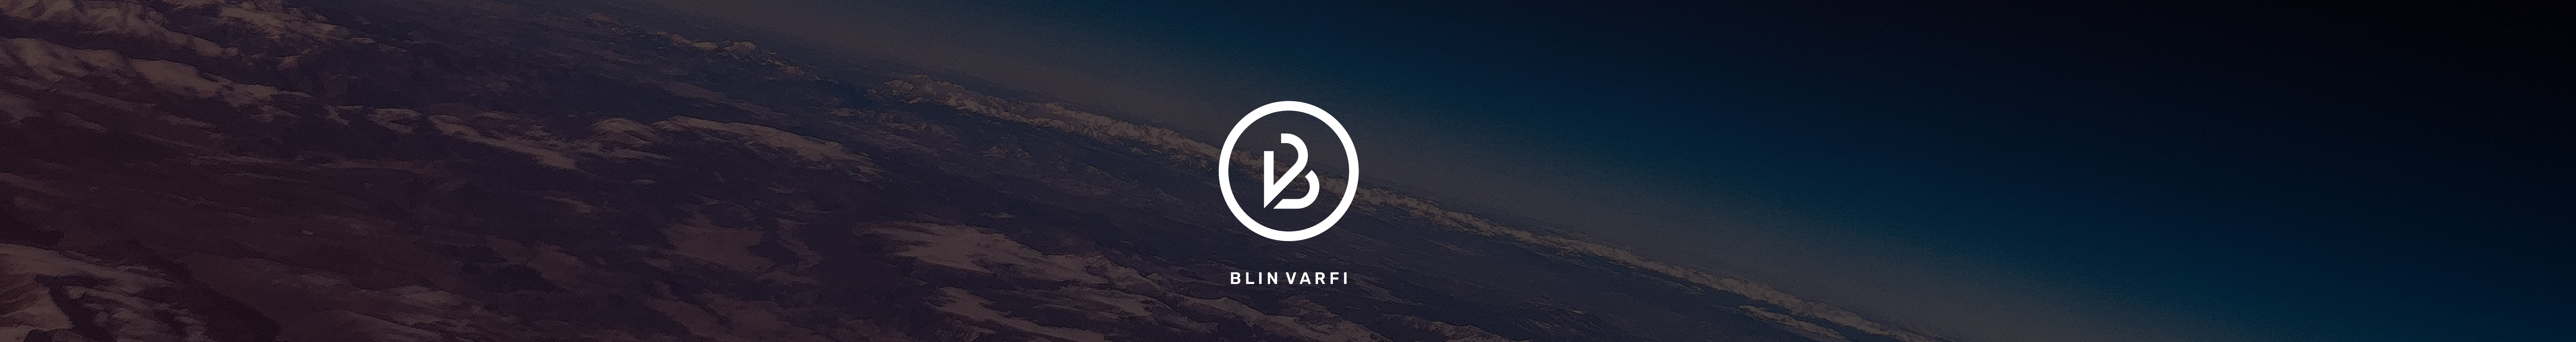 Blin Varfi's profile banner